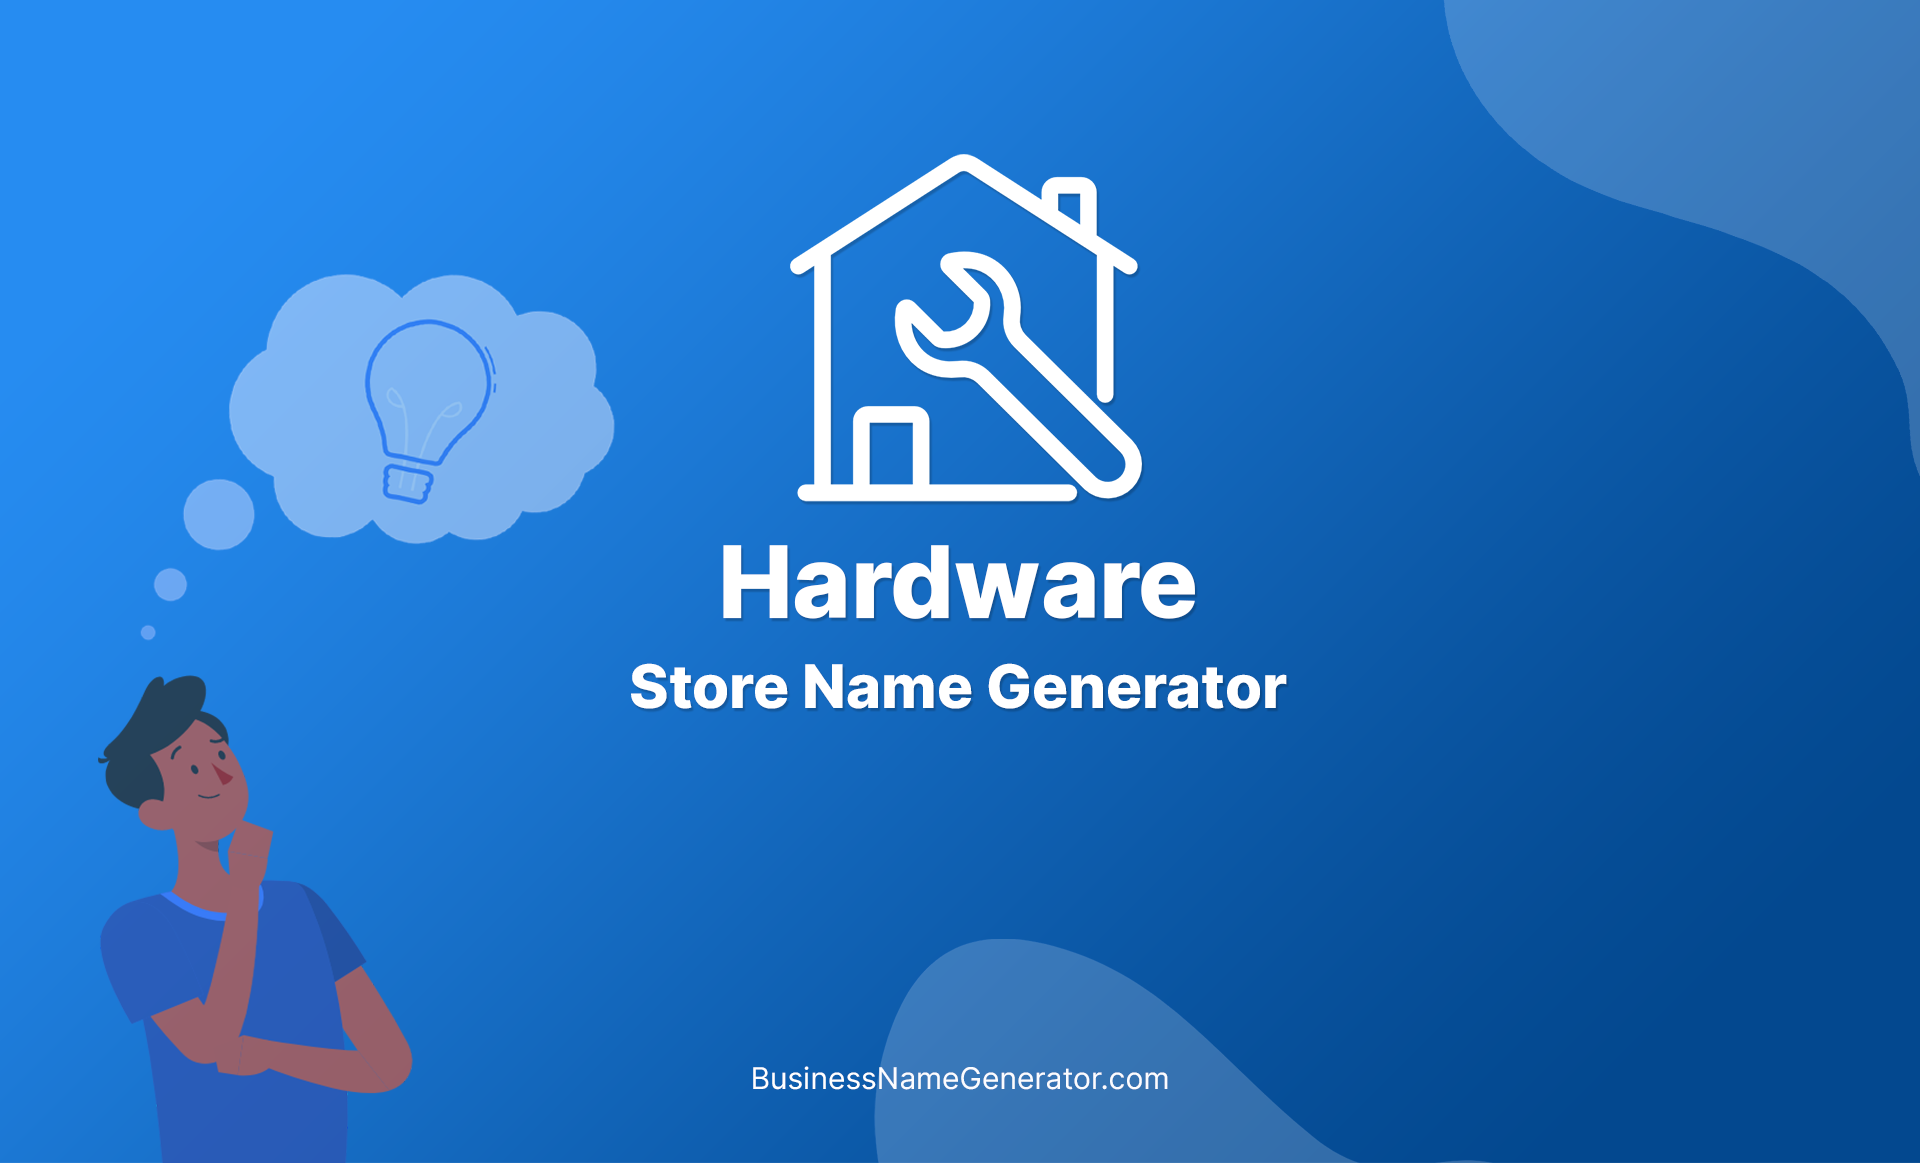 Hardware Store Name Generator